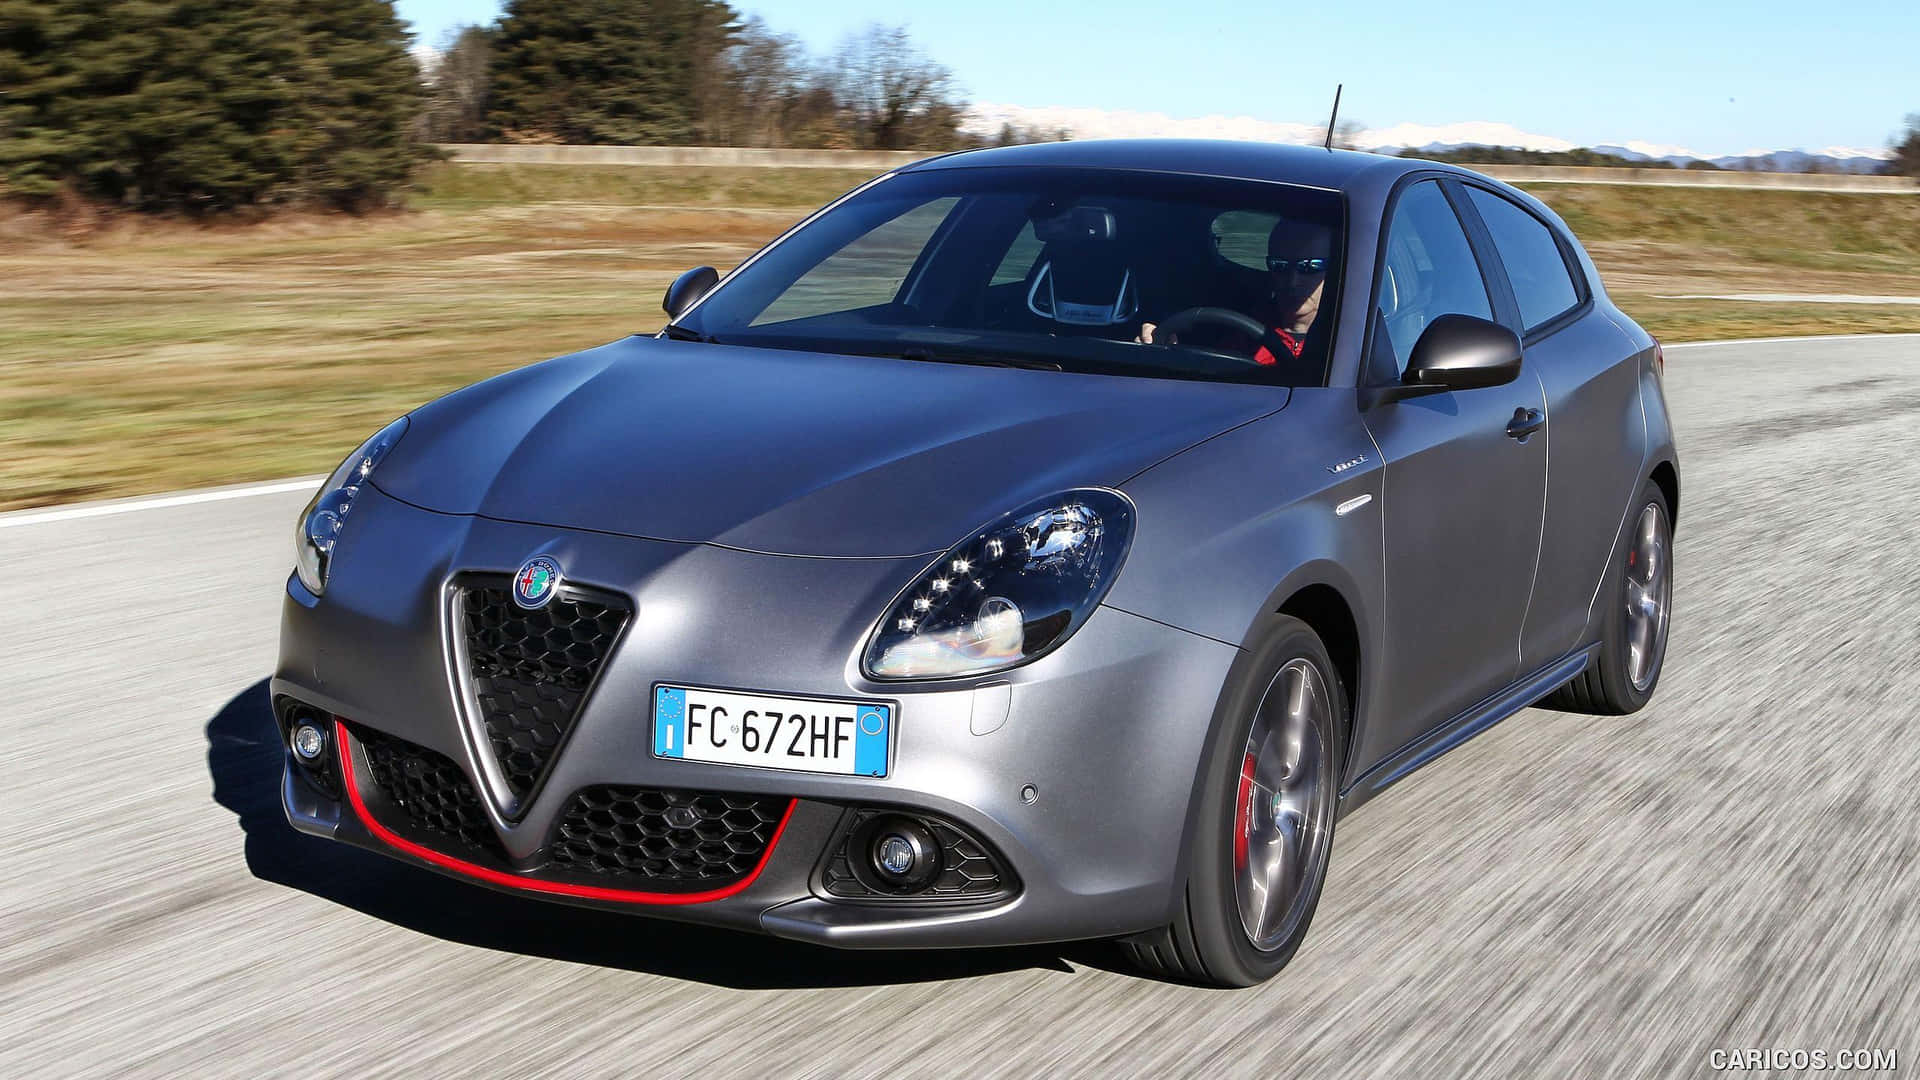 Alfa Romeo - A Symbol of Italian Excellence